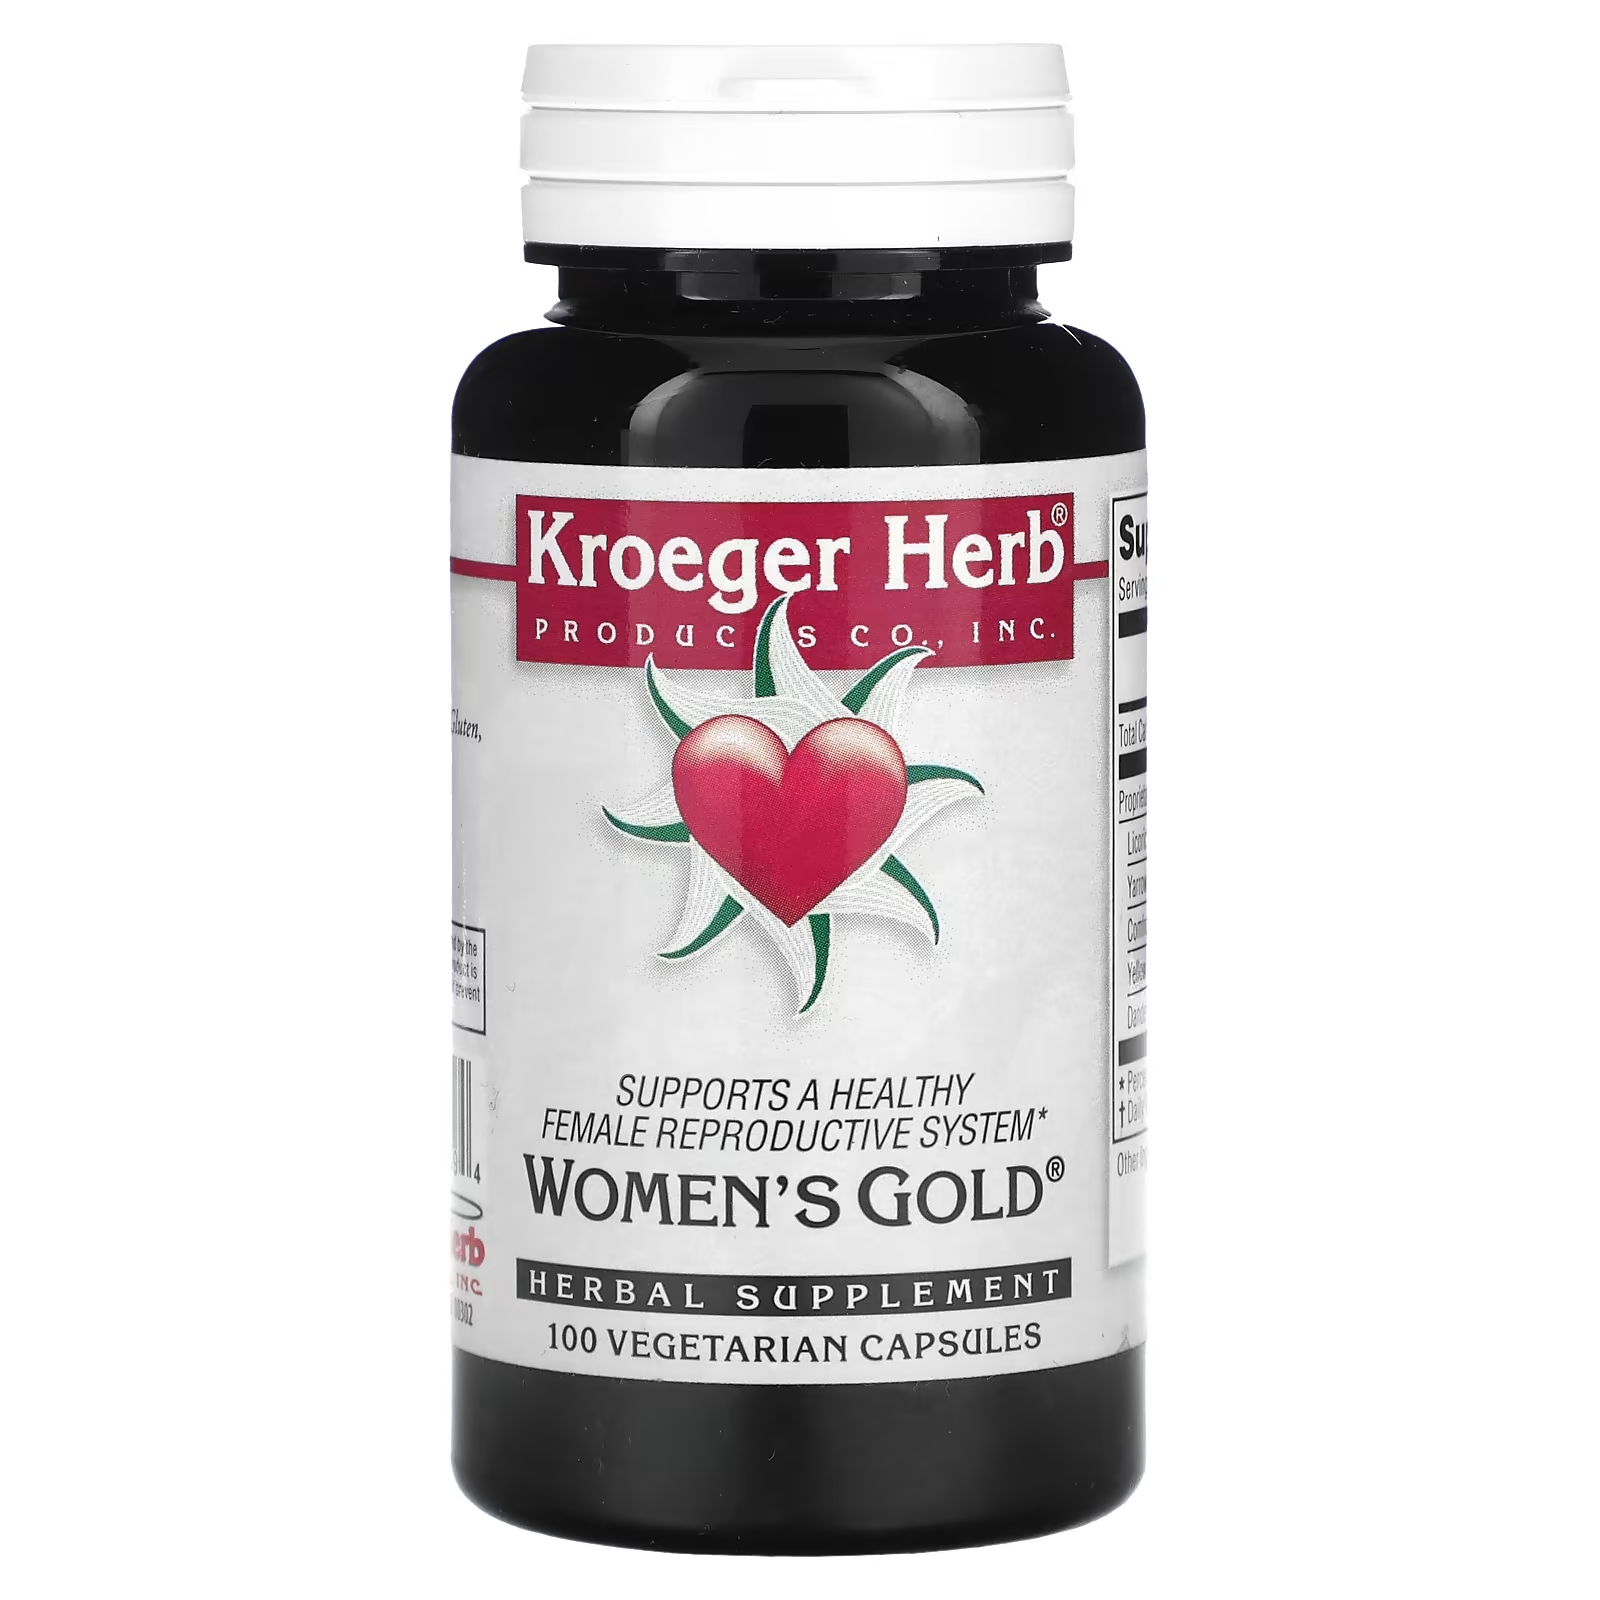 Растительная добавка Kroeger Herb Co женская, 100 капсул растительная добавка kroeger herb co балансировщик полярности 100 капсул